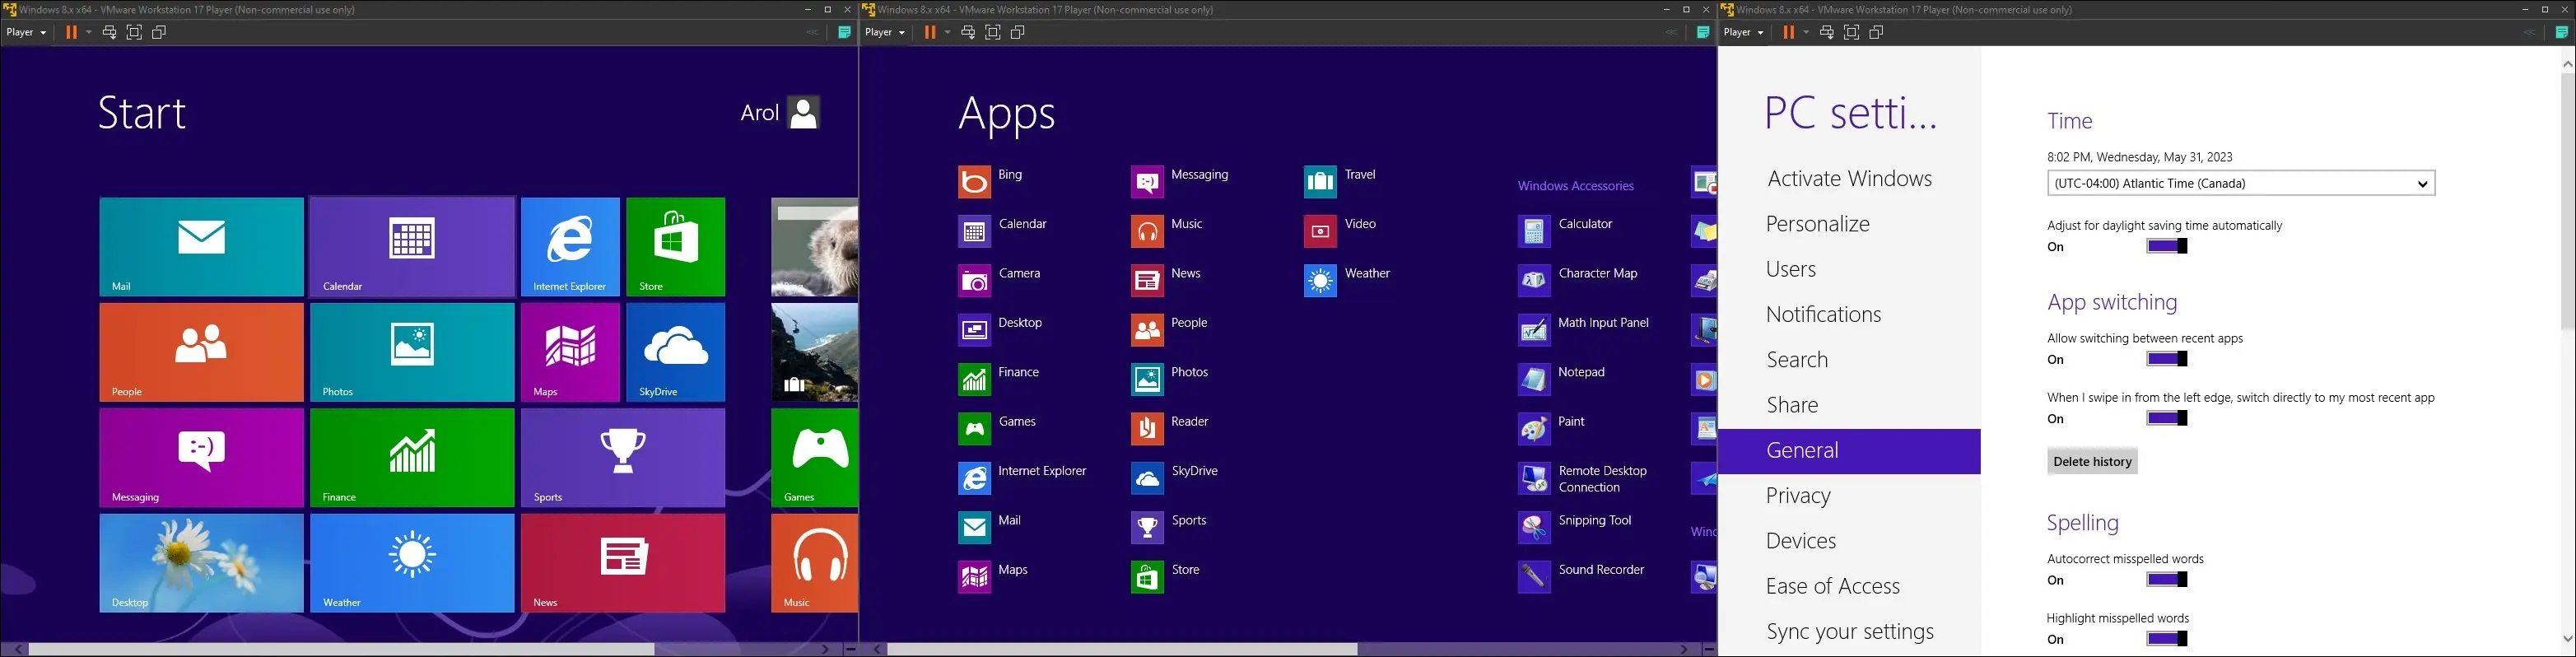 gambar Windows 8 pada mesin virtual, menampilkan menu mulai, semua menu aplikasi, dan aplikasi pengaturan